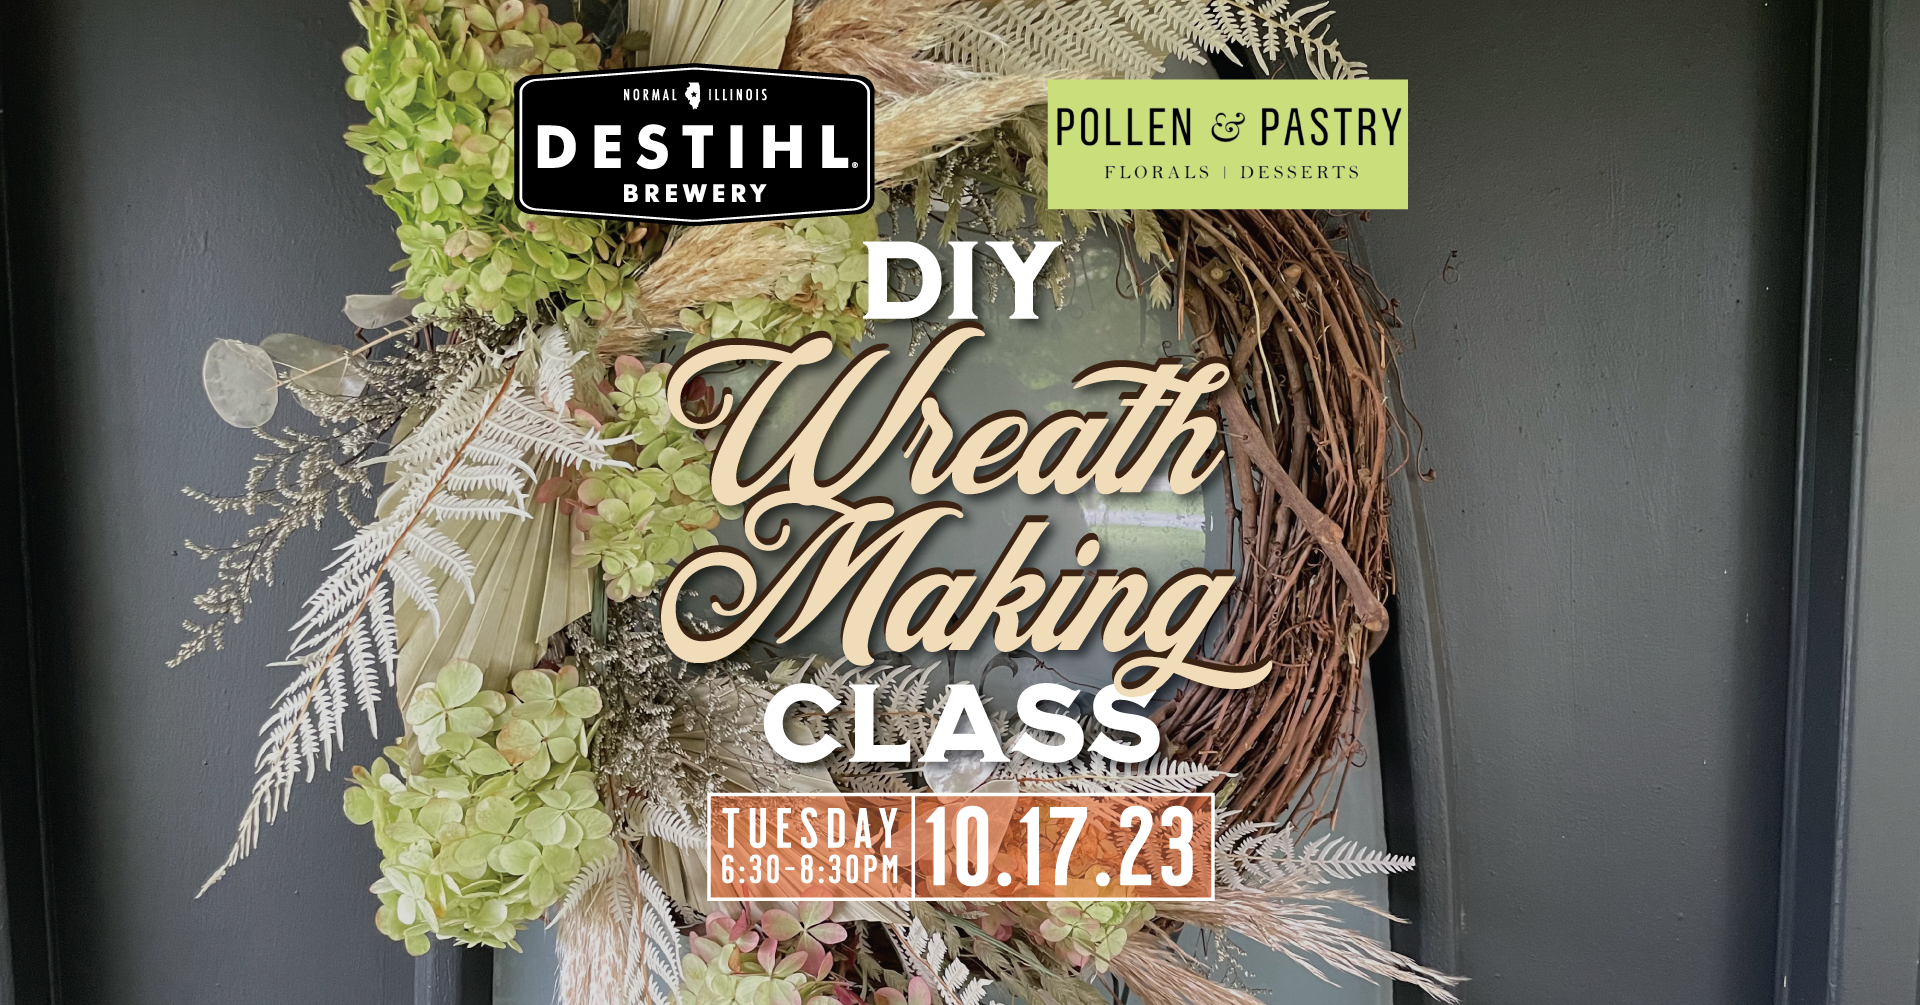 DIY Wreath Class with Pollen & Pastry